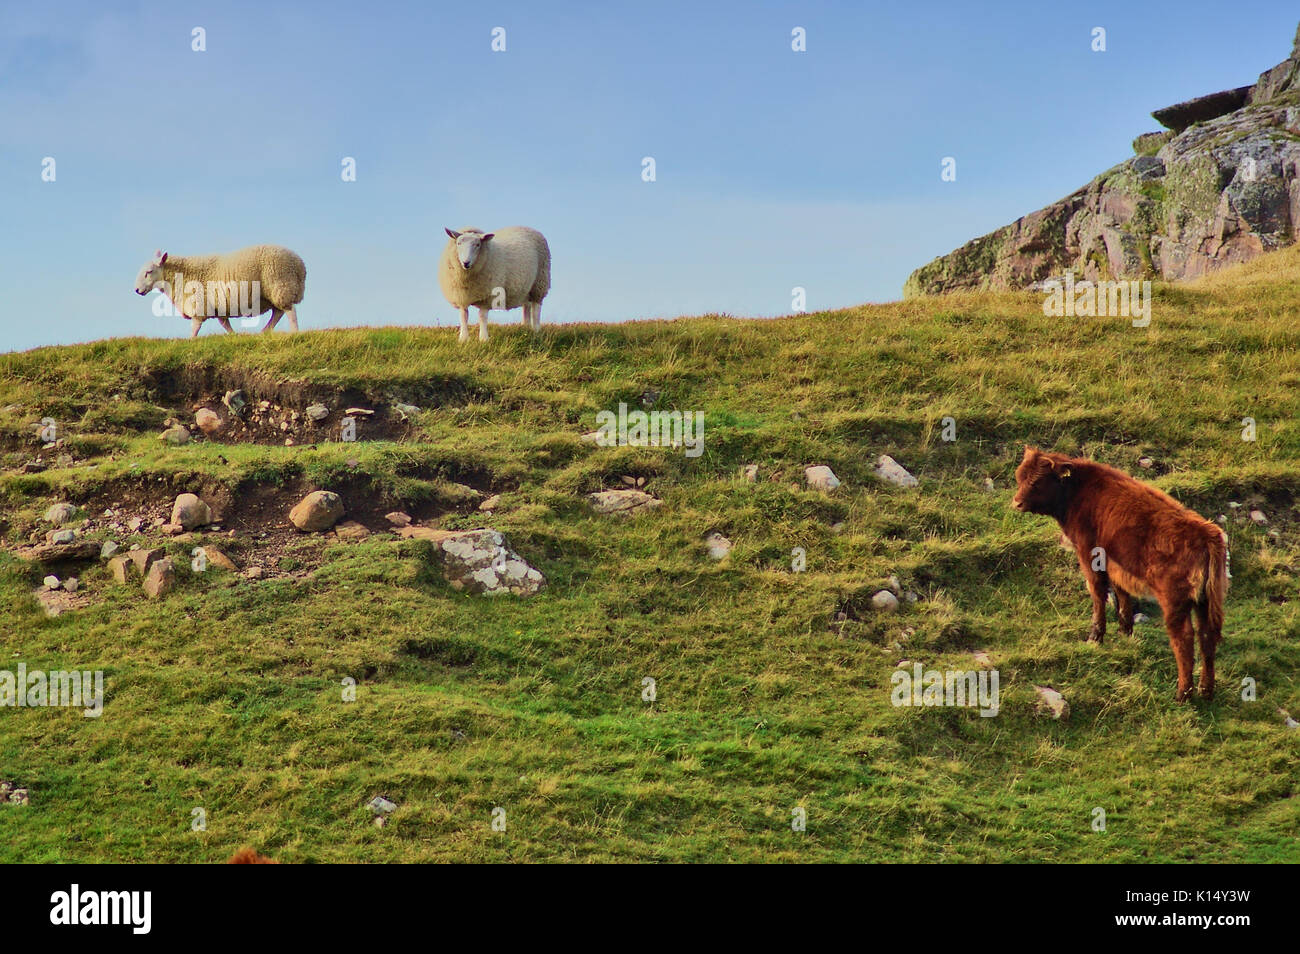 Two sheep and a cow on a grassy mountain ridge ridge Stock Photo